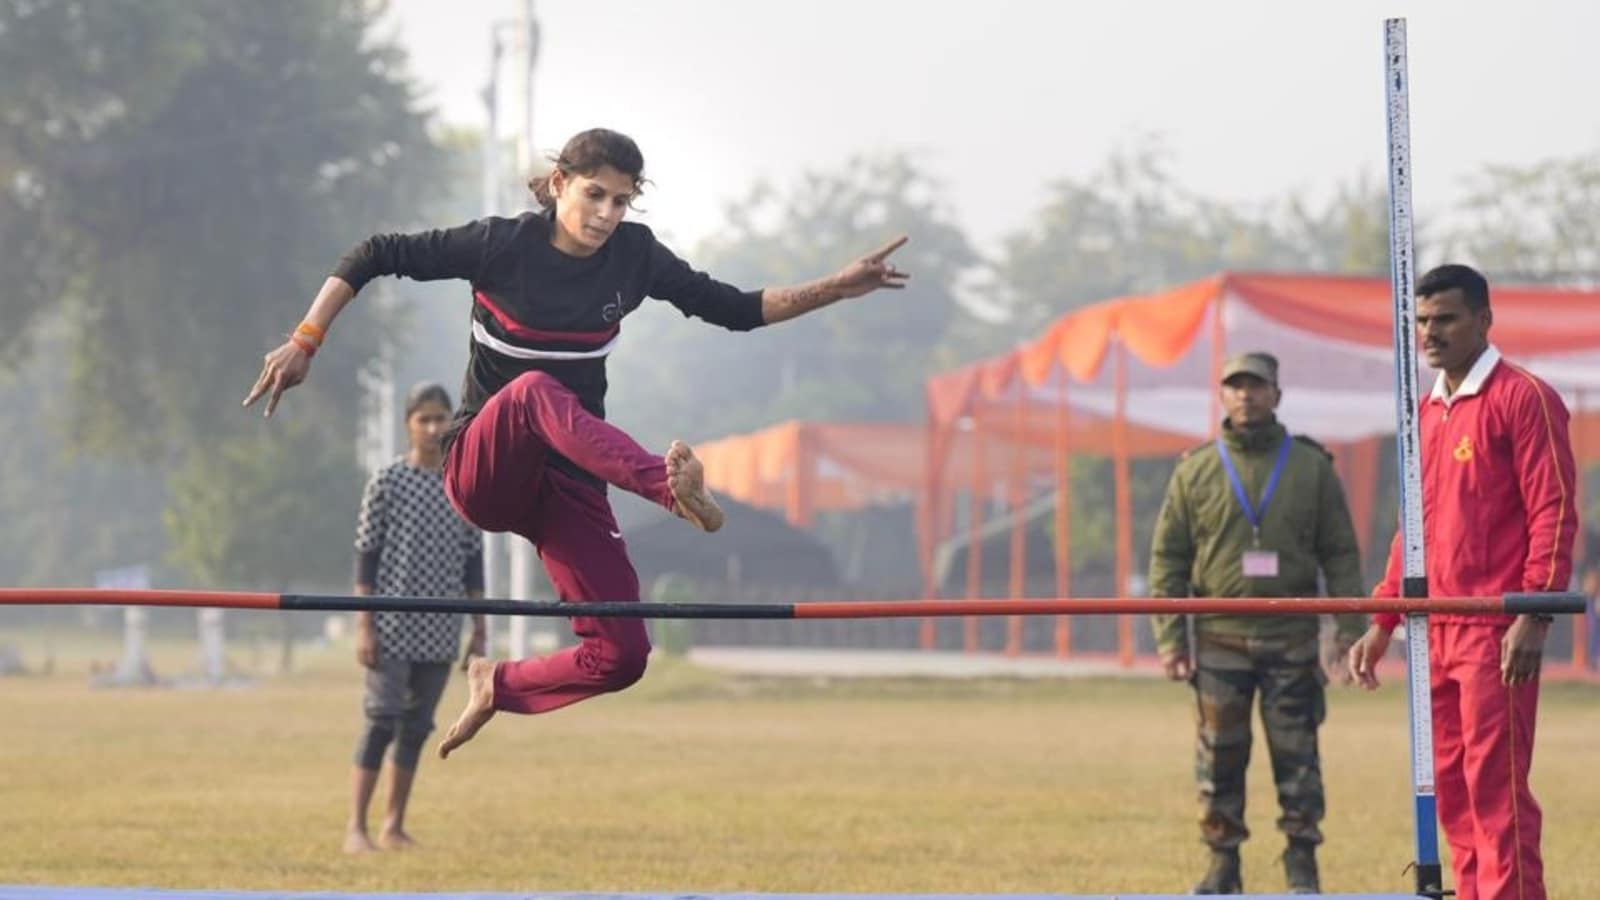 A woman aspirant participates in the high jump as 1670870526666 1675520002144 1675520002144